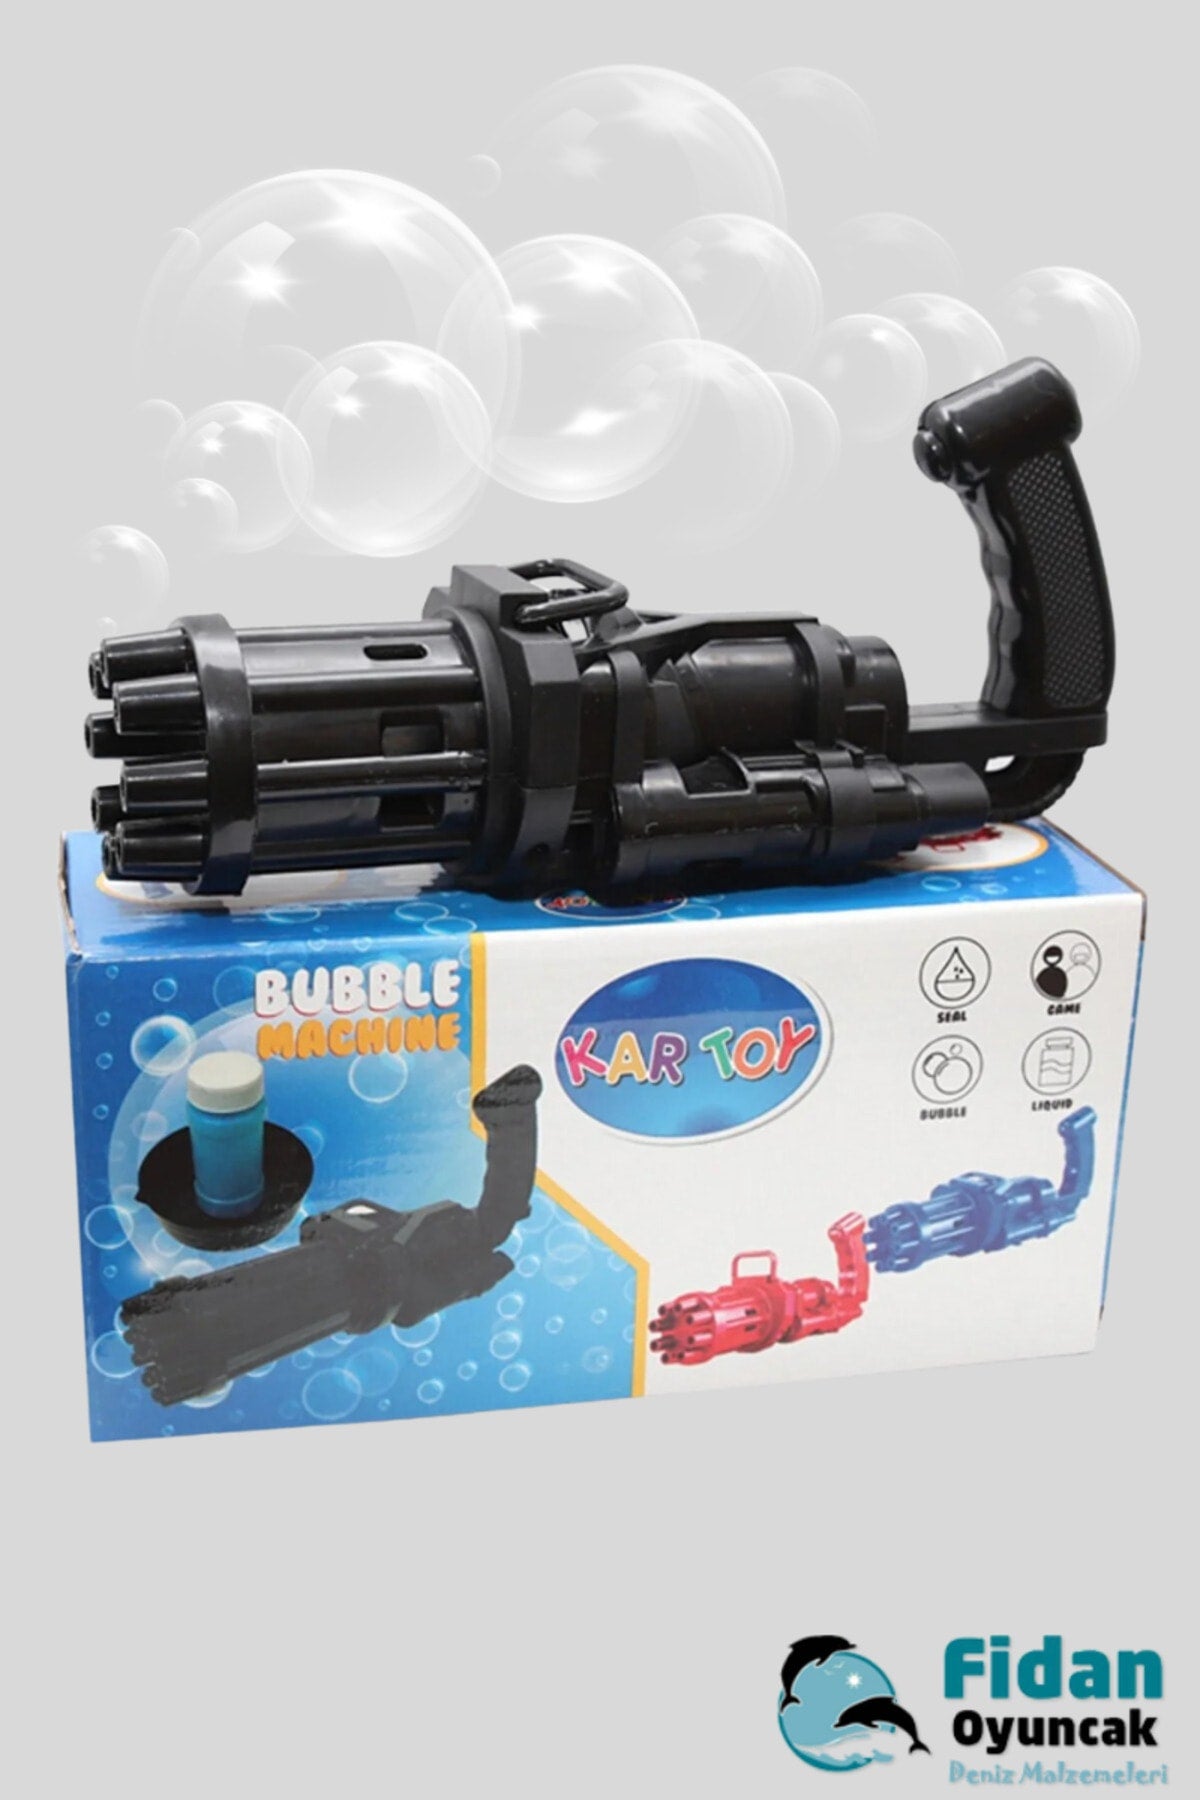 Battery Operated Foam Toy Bubble Foam Machine Gun Bubble Machine 50 ml Bubble Liquid